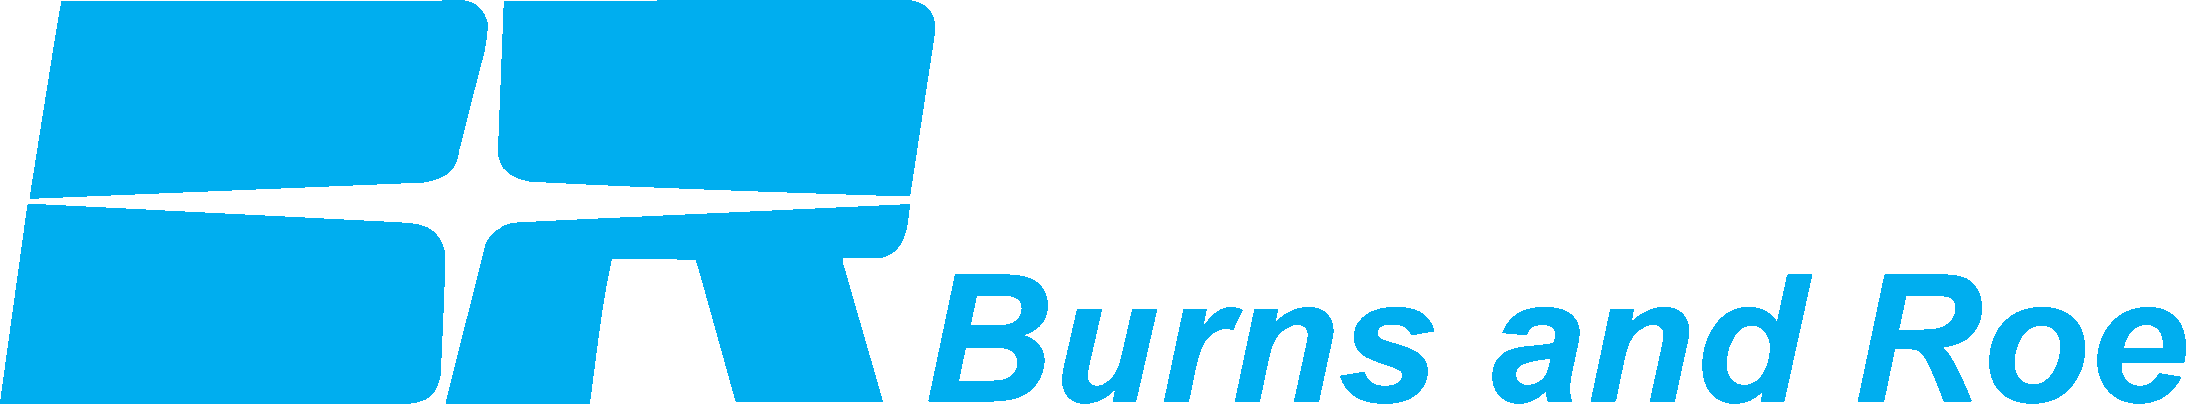 Burns and Roe Logo'